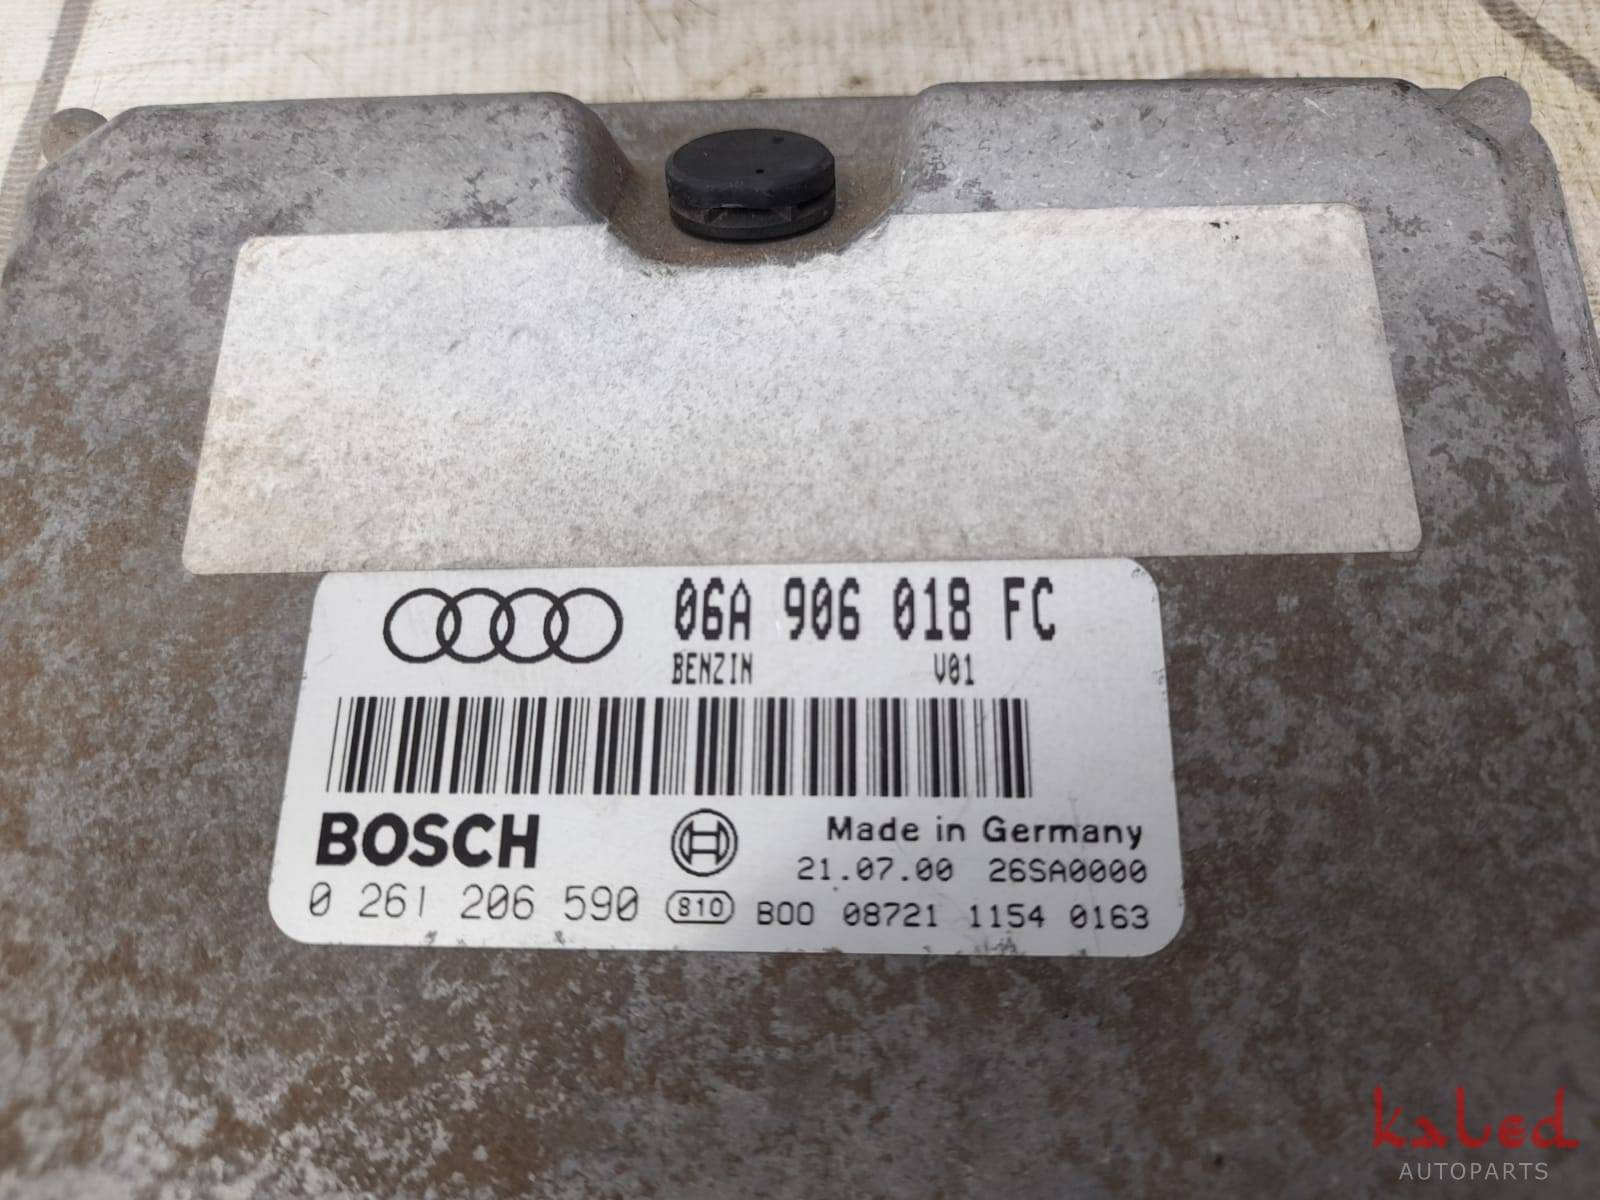 Kit Code Audi A3 Aspirado 1.8 99/2006